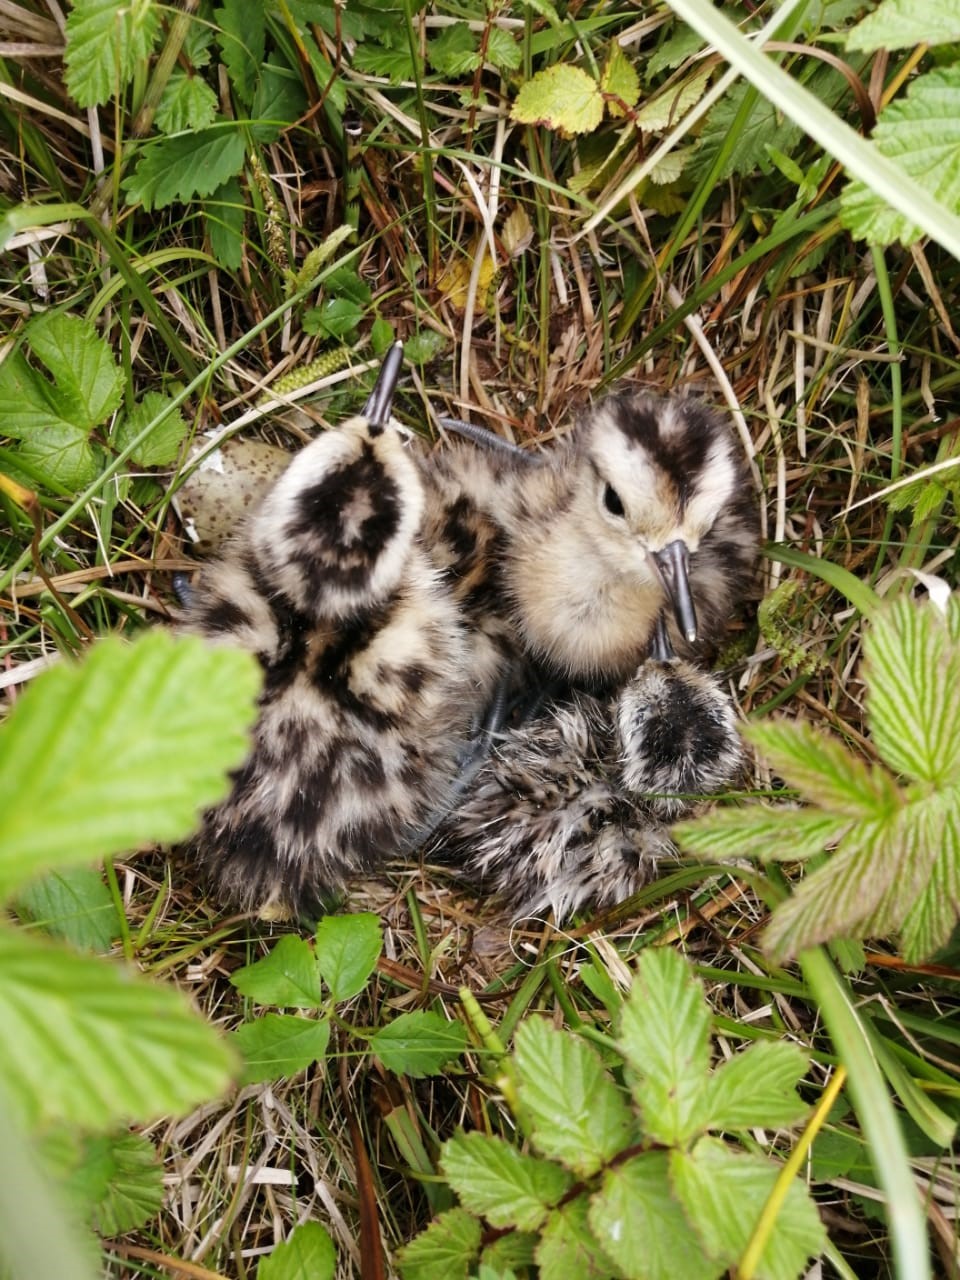 Curlew chicks hatching